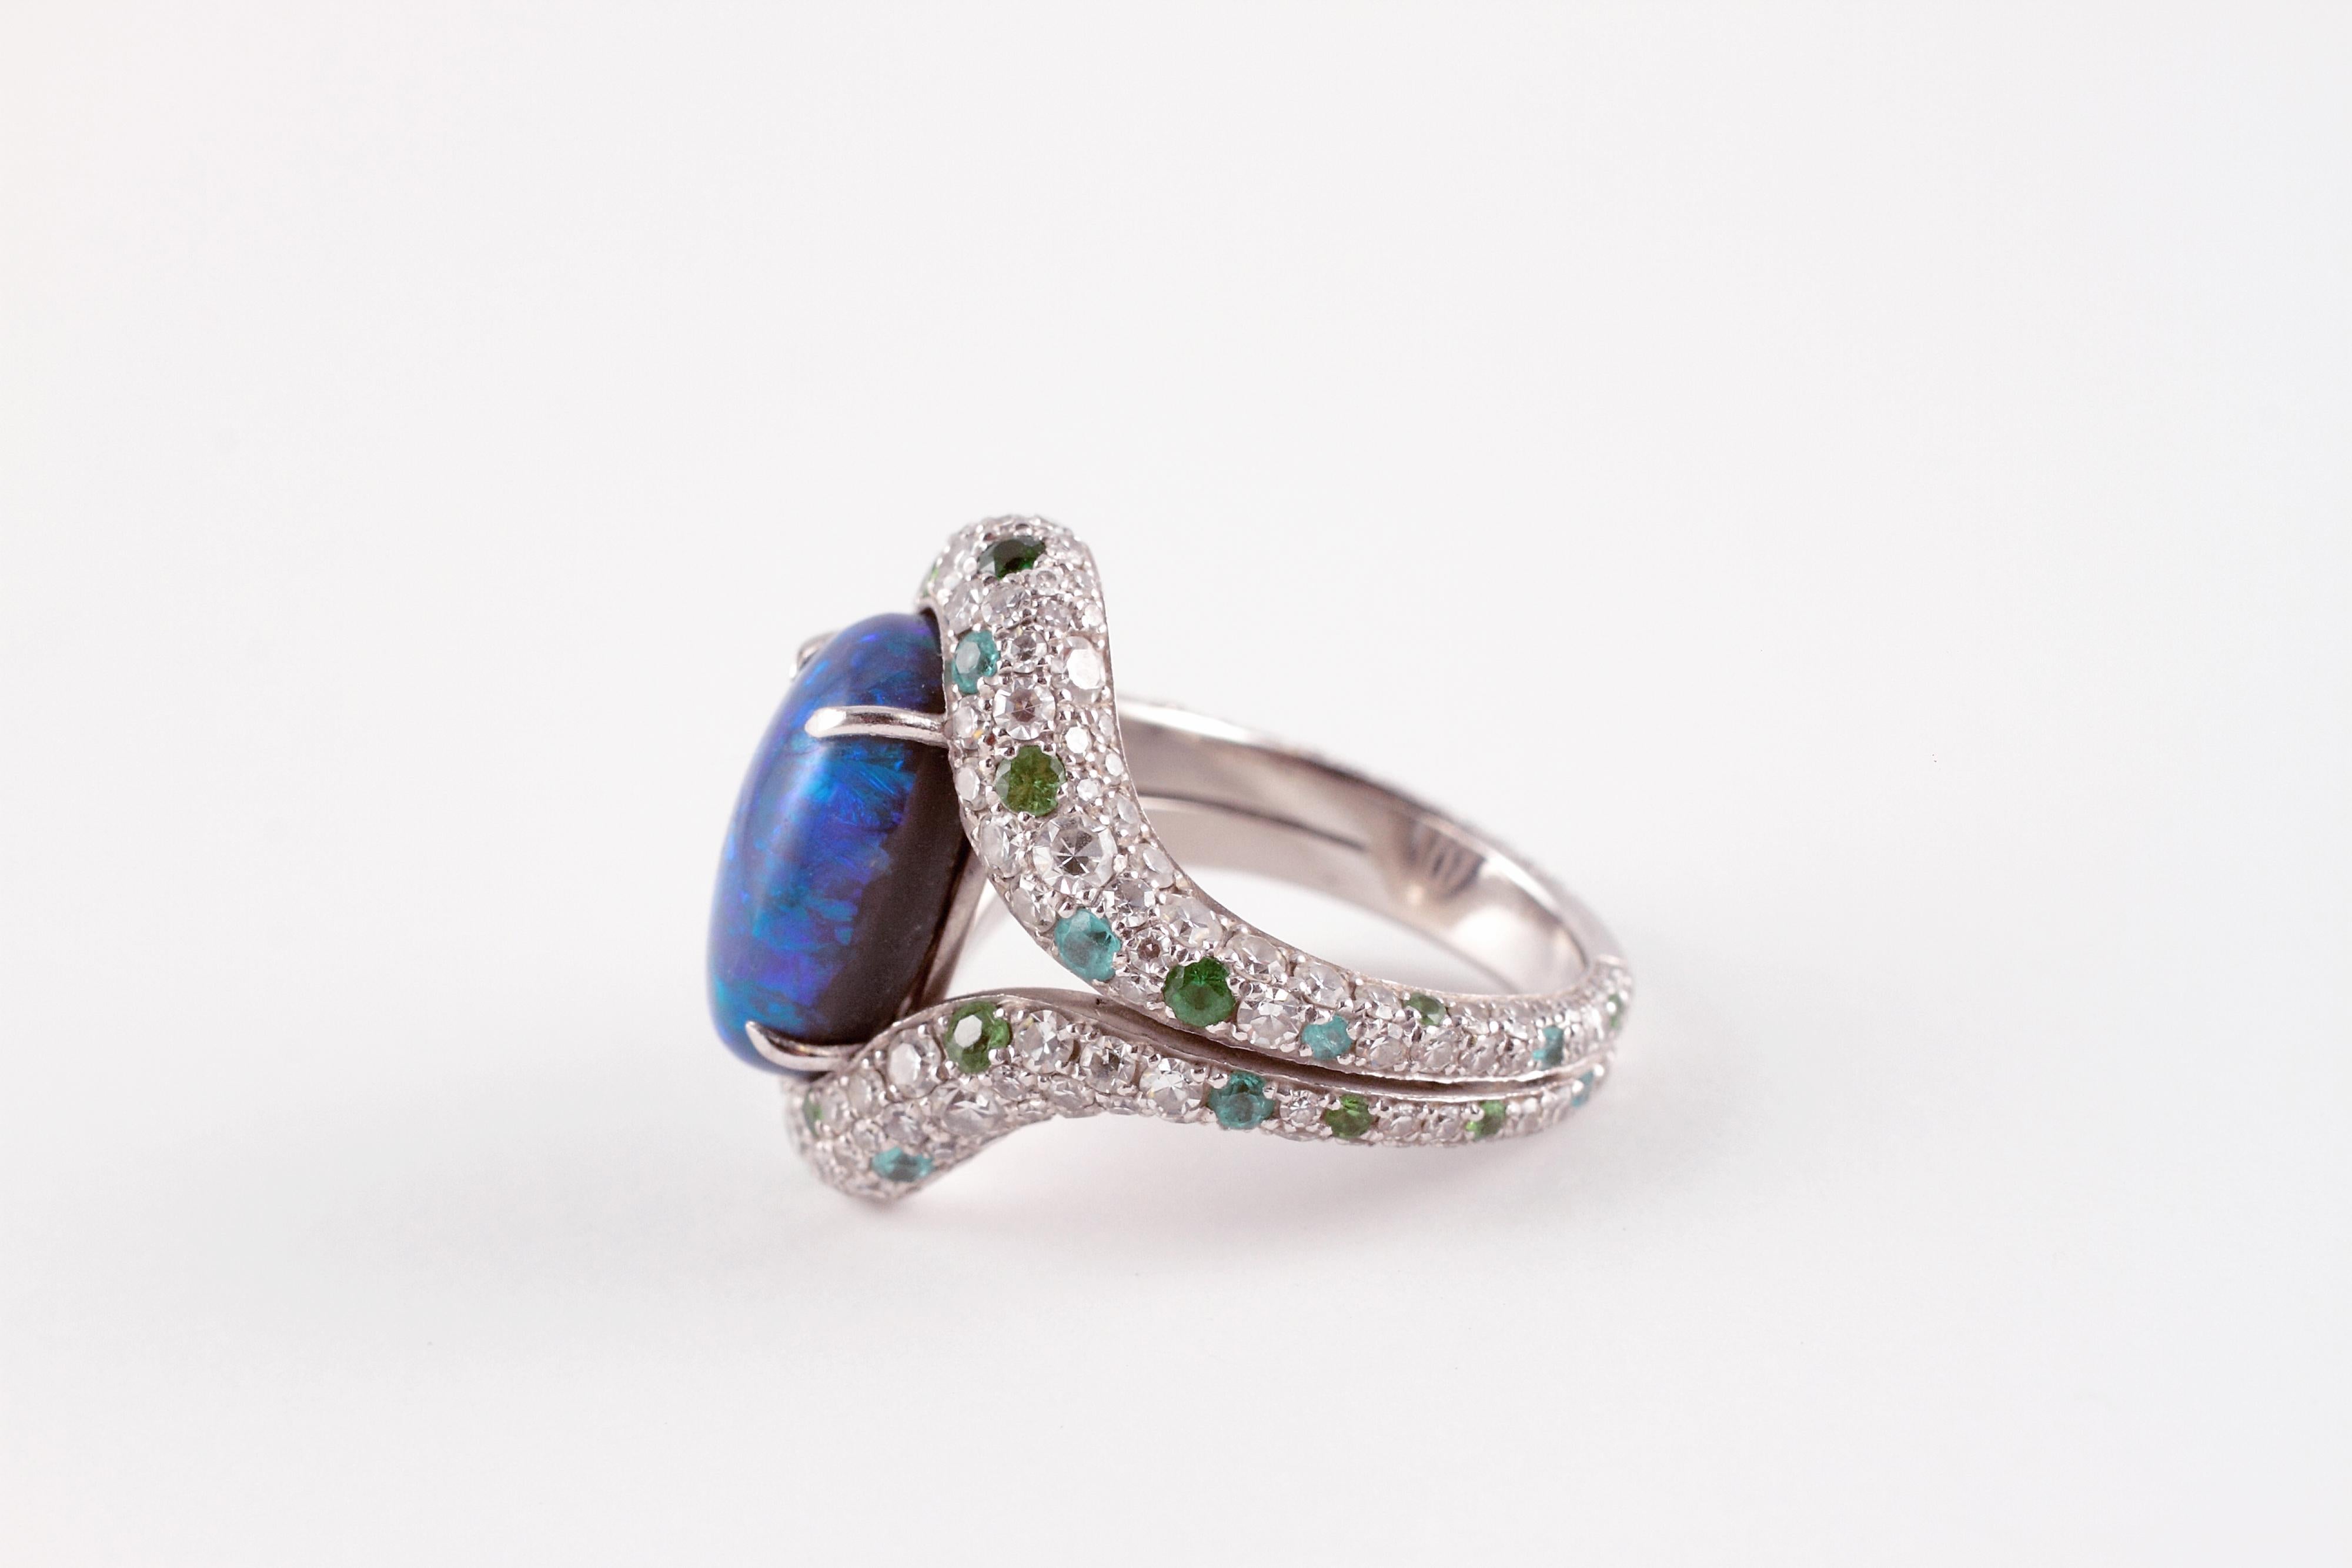 Oval Cut David Morris 4.82 Carat Opal 2.78 Carat Diamond Tsavorite Tourmaline Ring For Sale